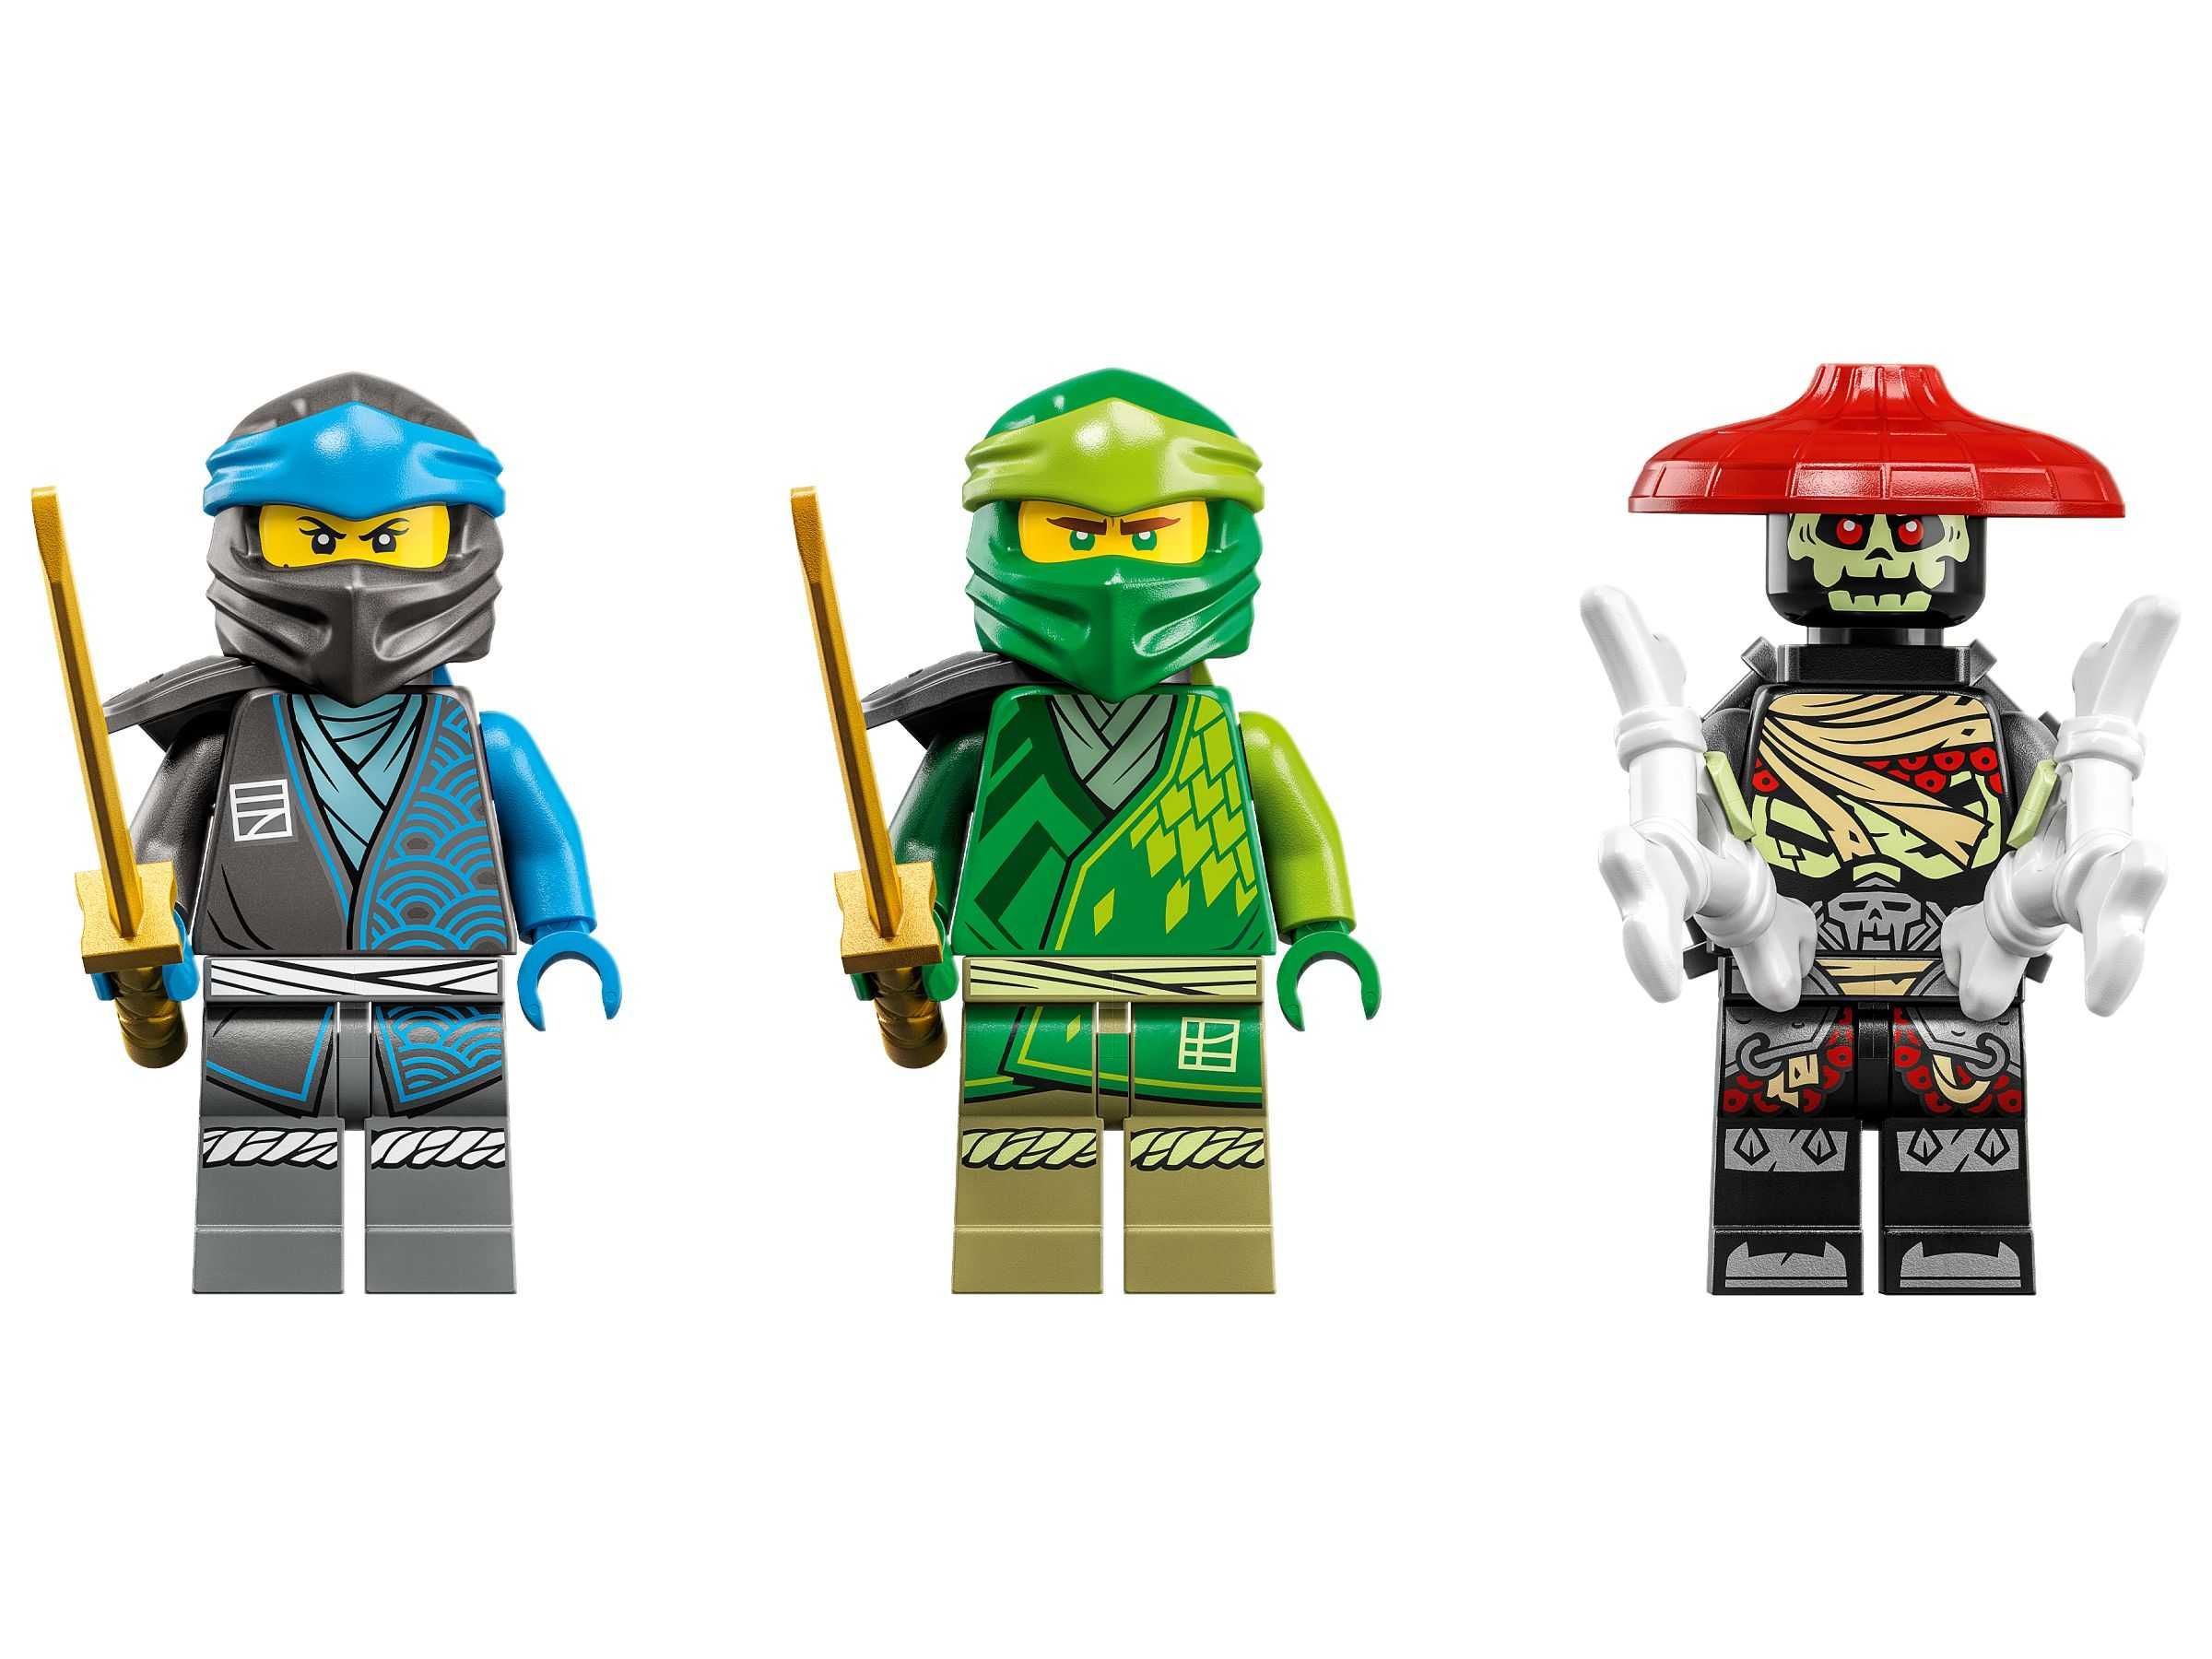 LEGO Ninjago Smok wodny Nyi EVO 71800